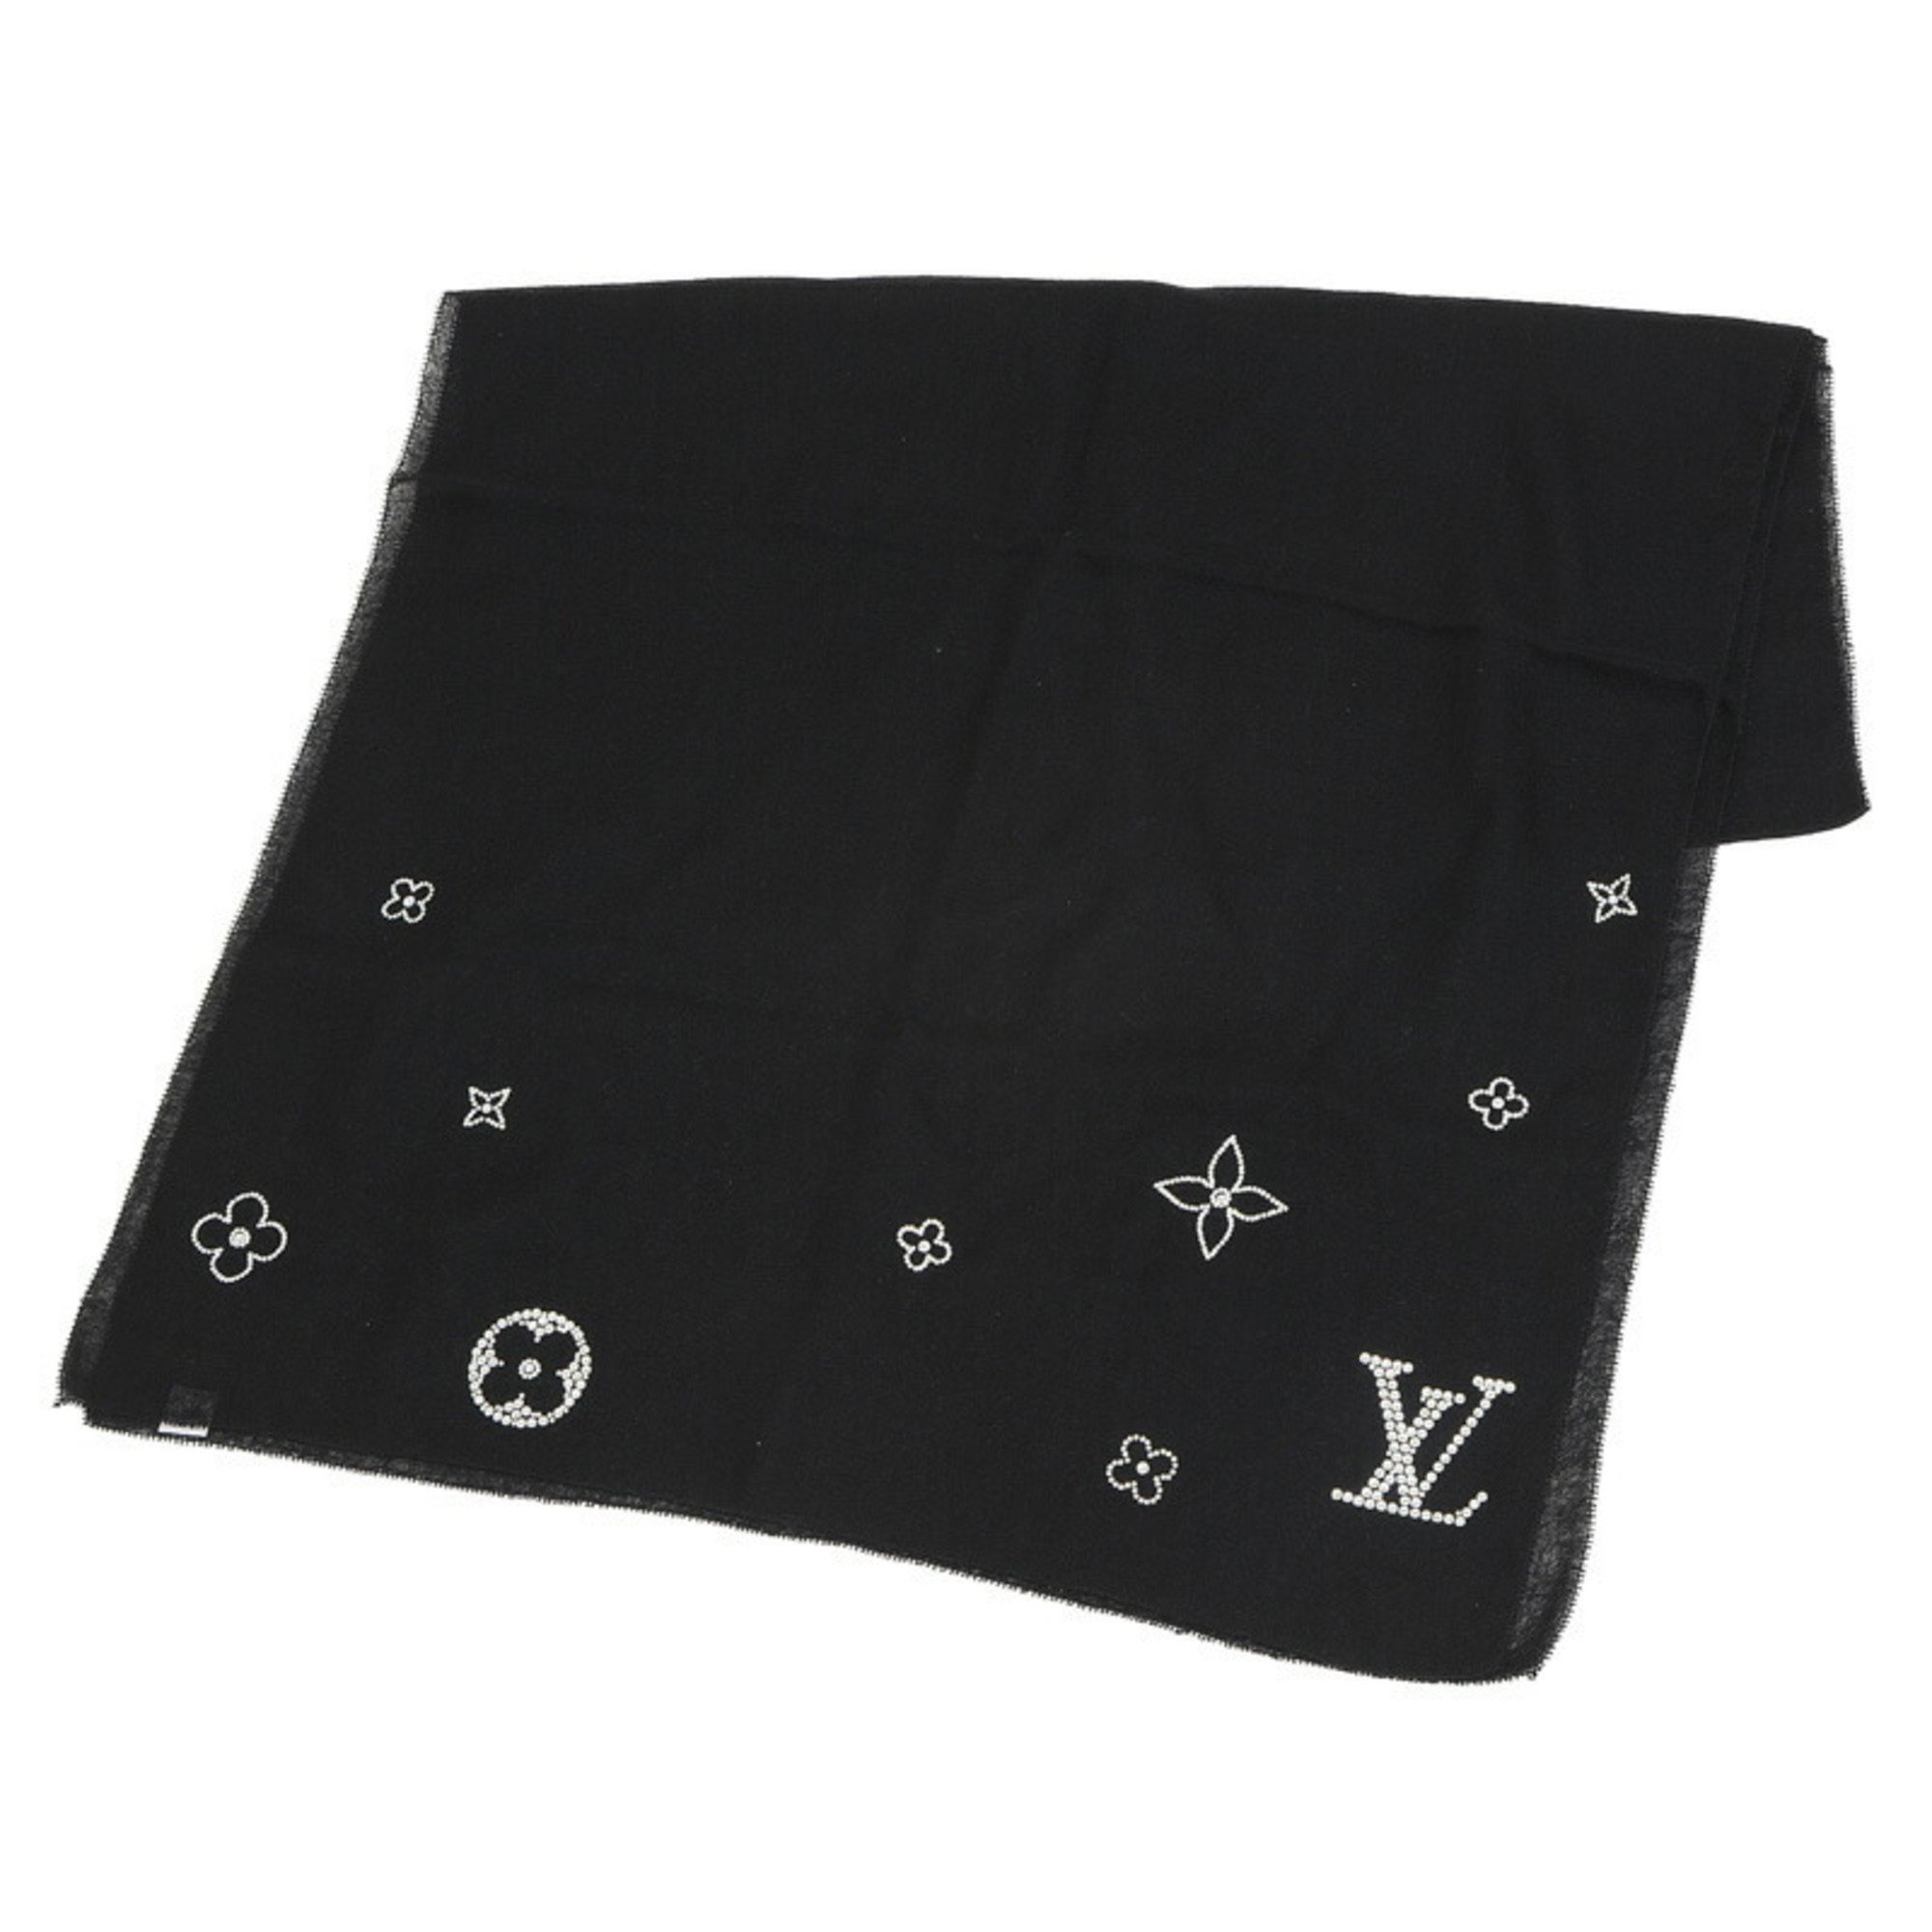 Louis Vuitton Etoile Monte Carlo Stole Black 100% Cashmere M74268